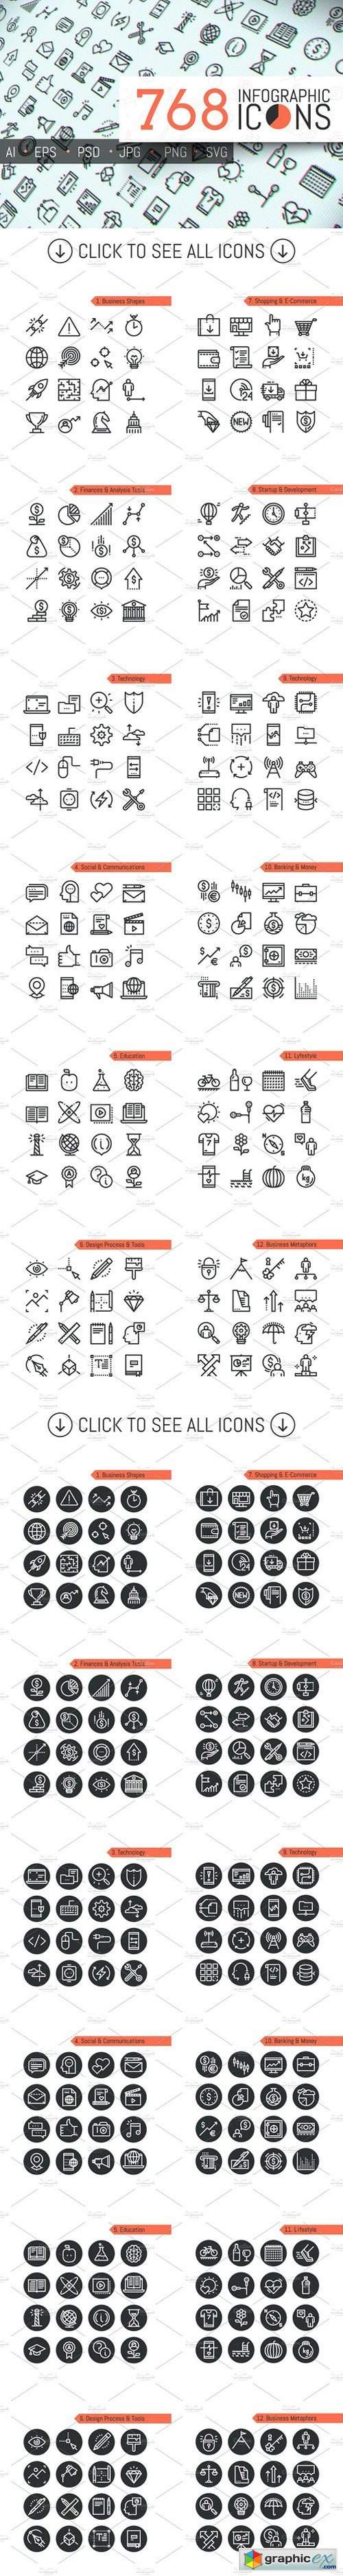 384 Infographic Icons